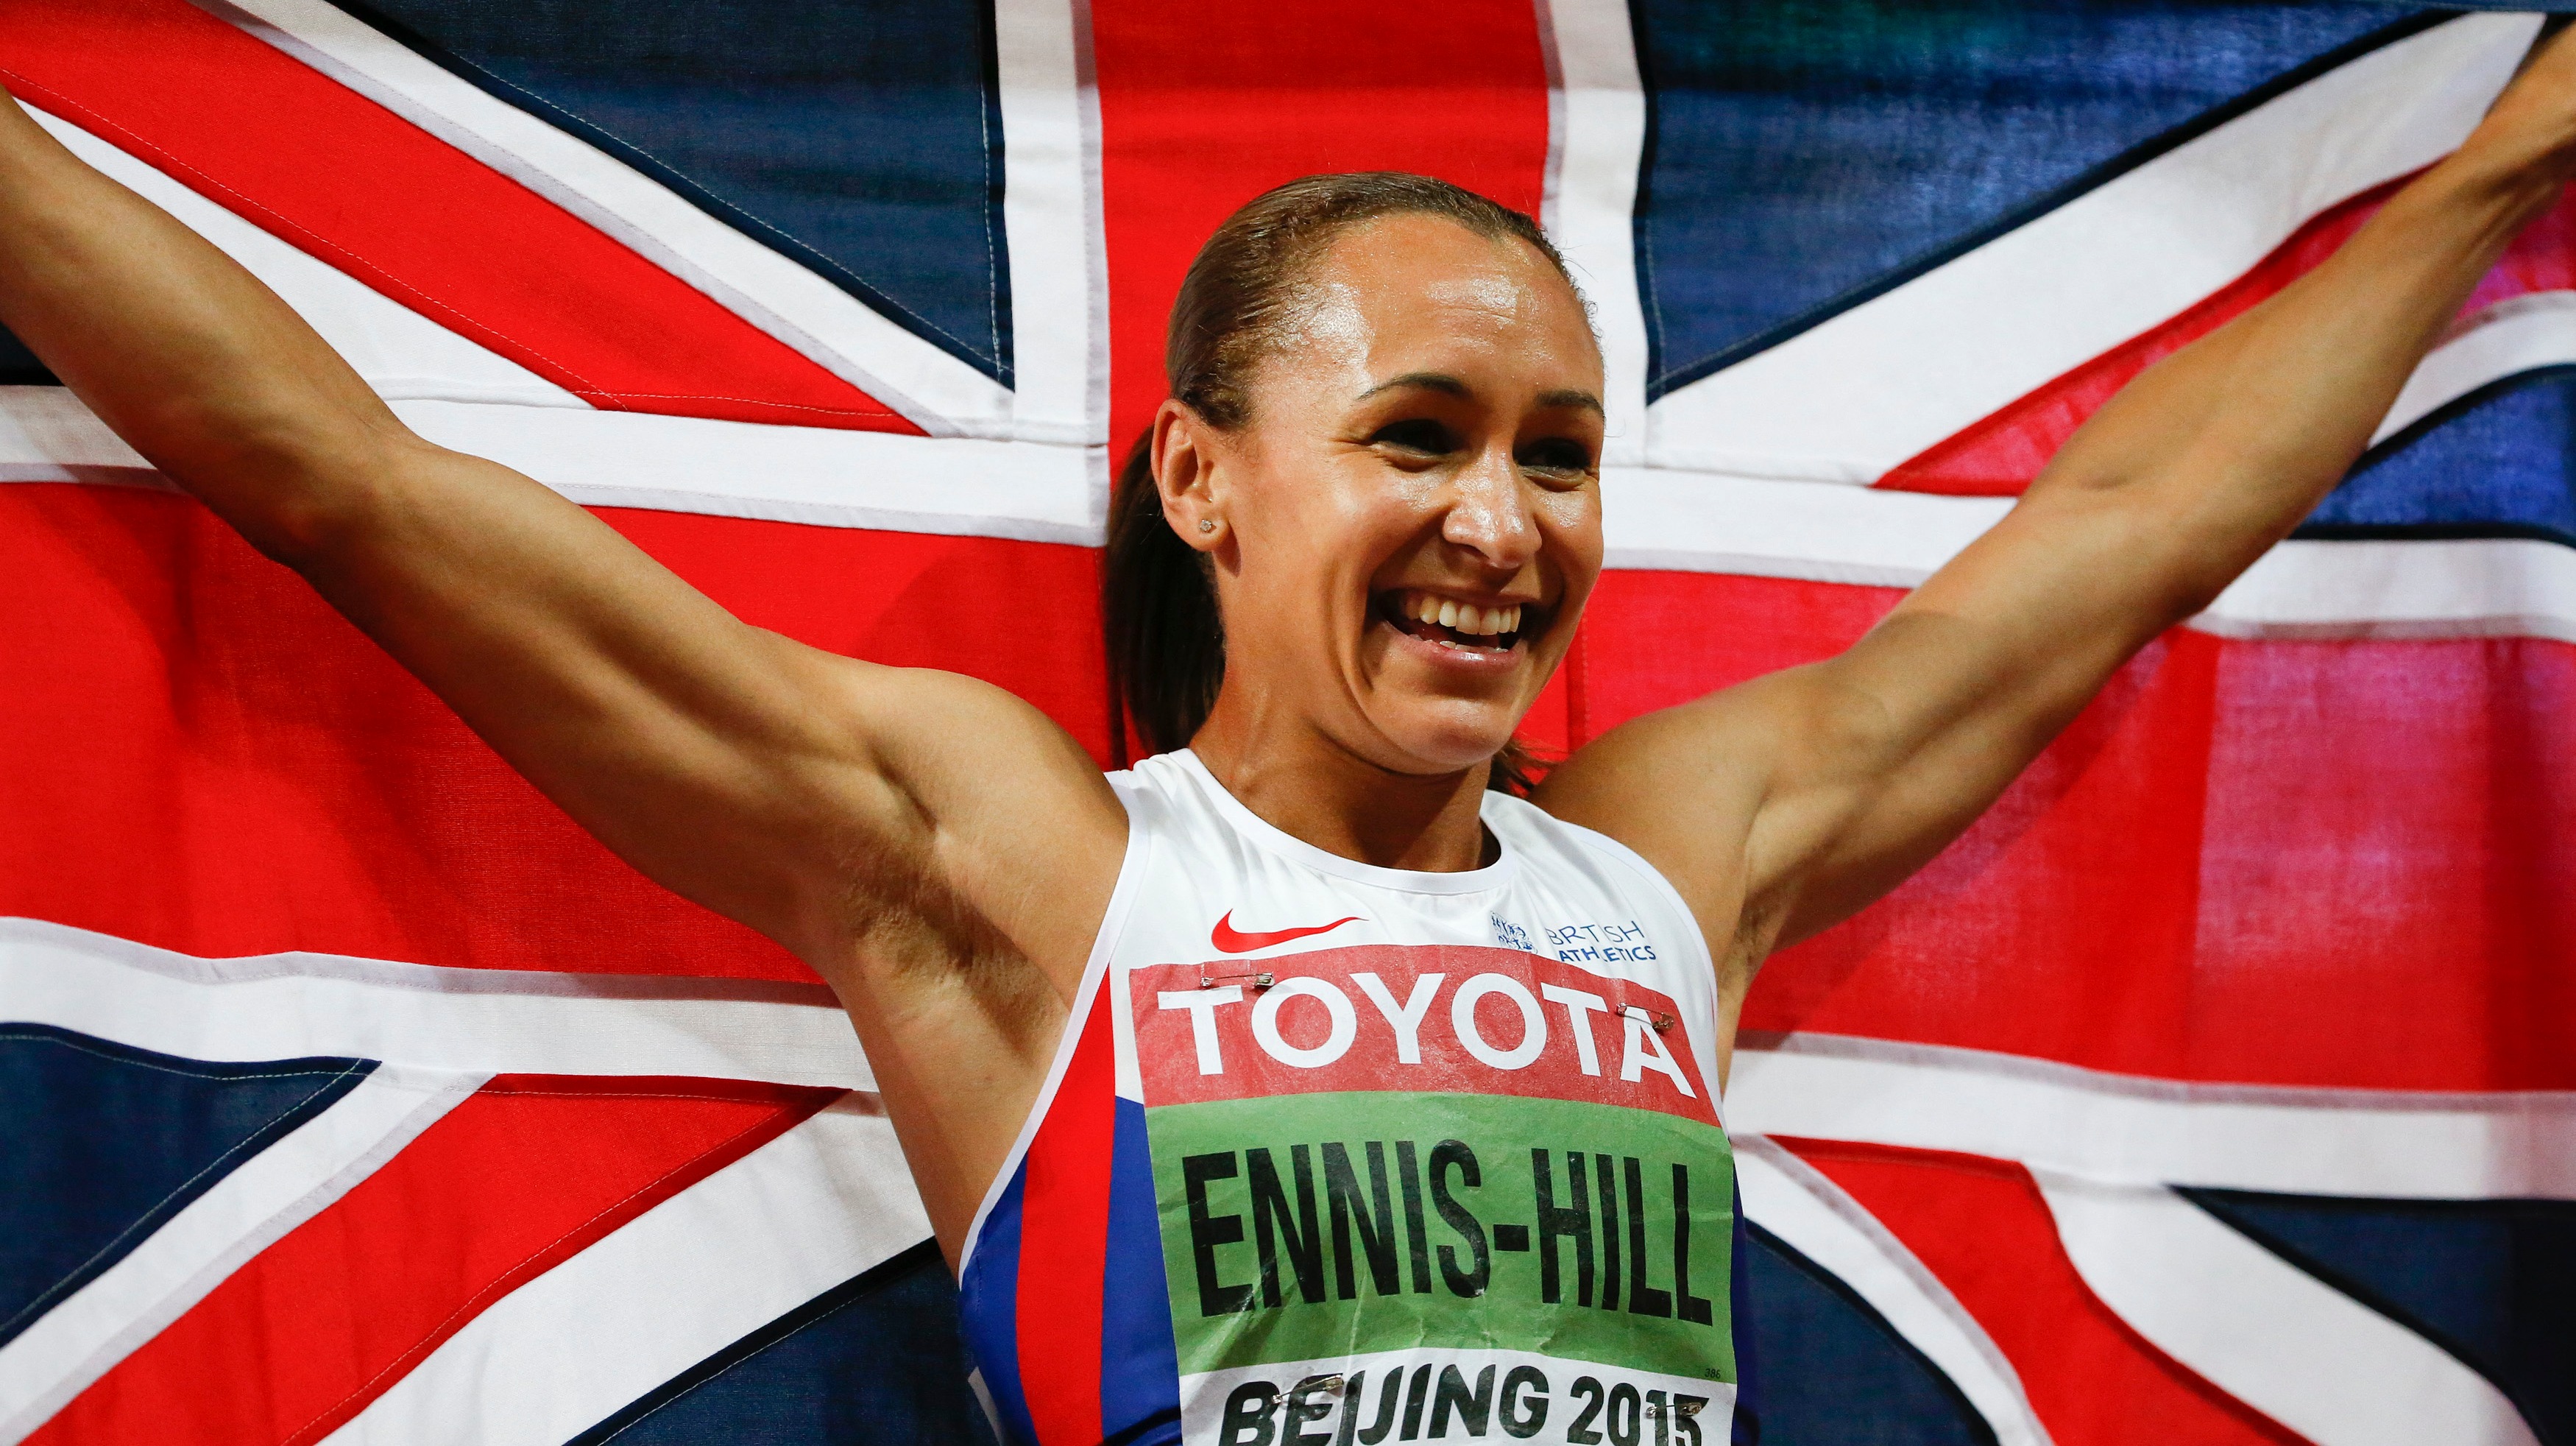 Jessica Ennis Hill Wins Heptathlon Gold At 2015 World Championships In Beijing Itv News